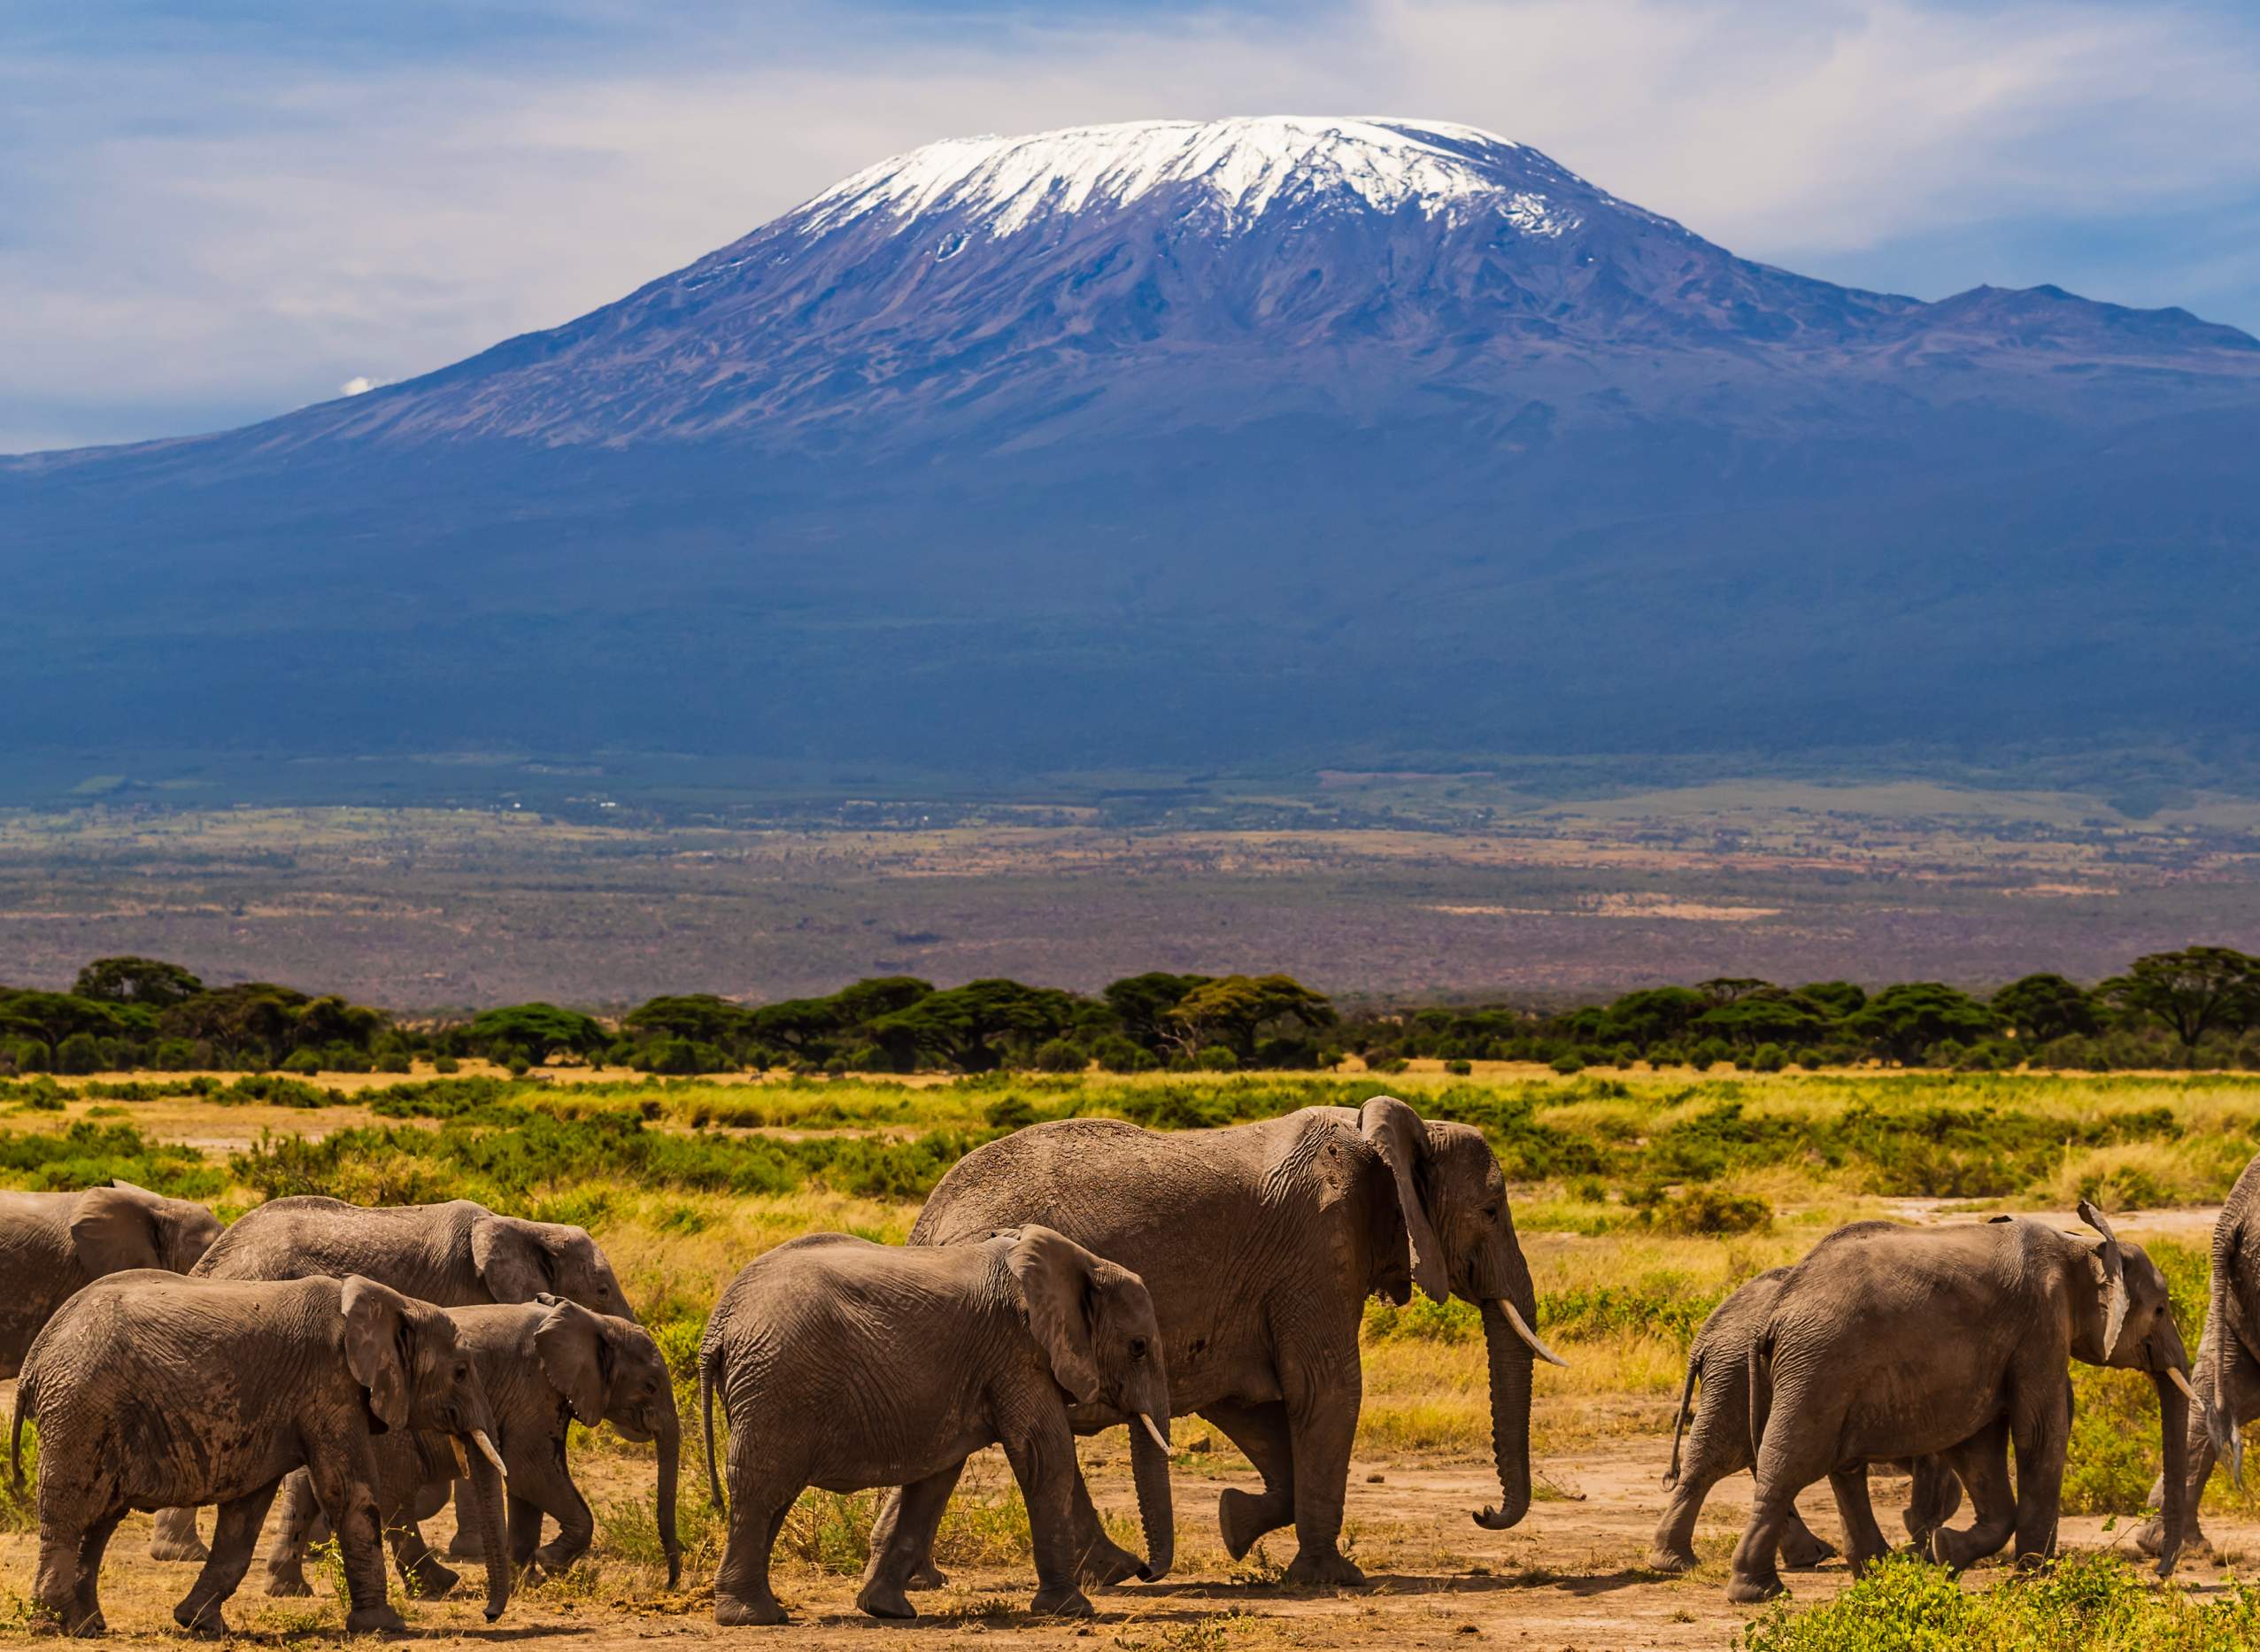 African elephants walking in the Savannah, Mount Kilimanjaro